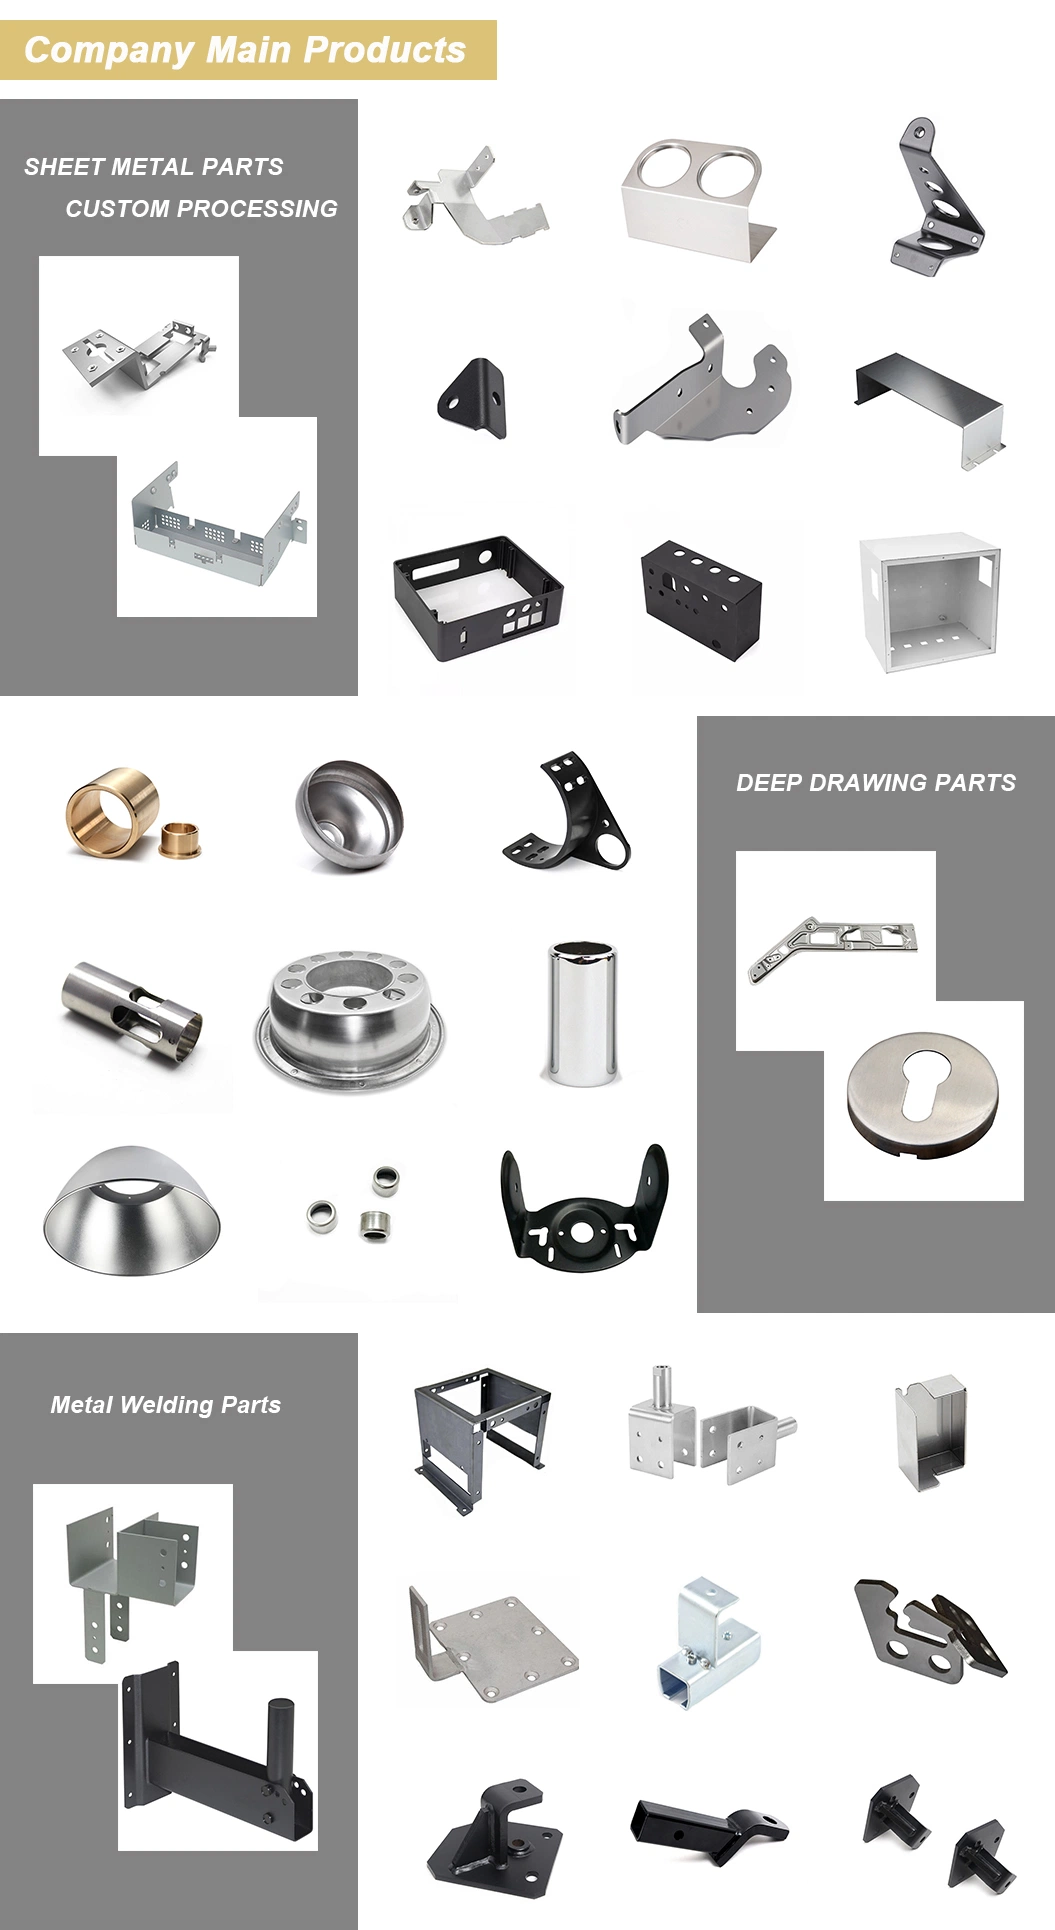 Hardware Stretch Parts to Produce Metal Sheet Metal Parts Laser Cutting Stamping